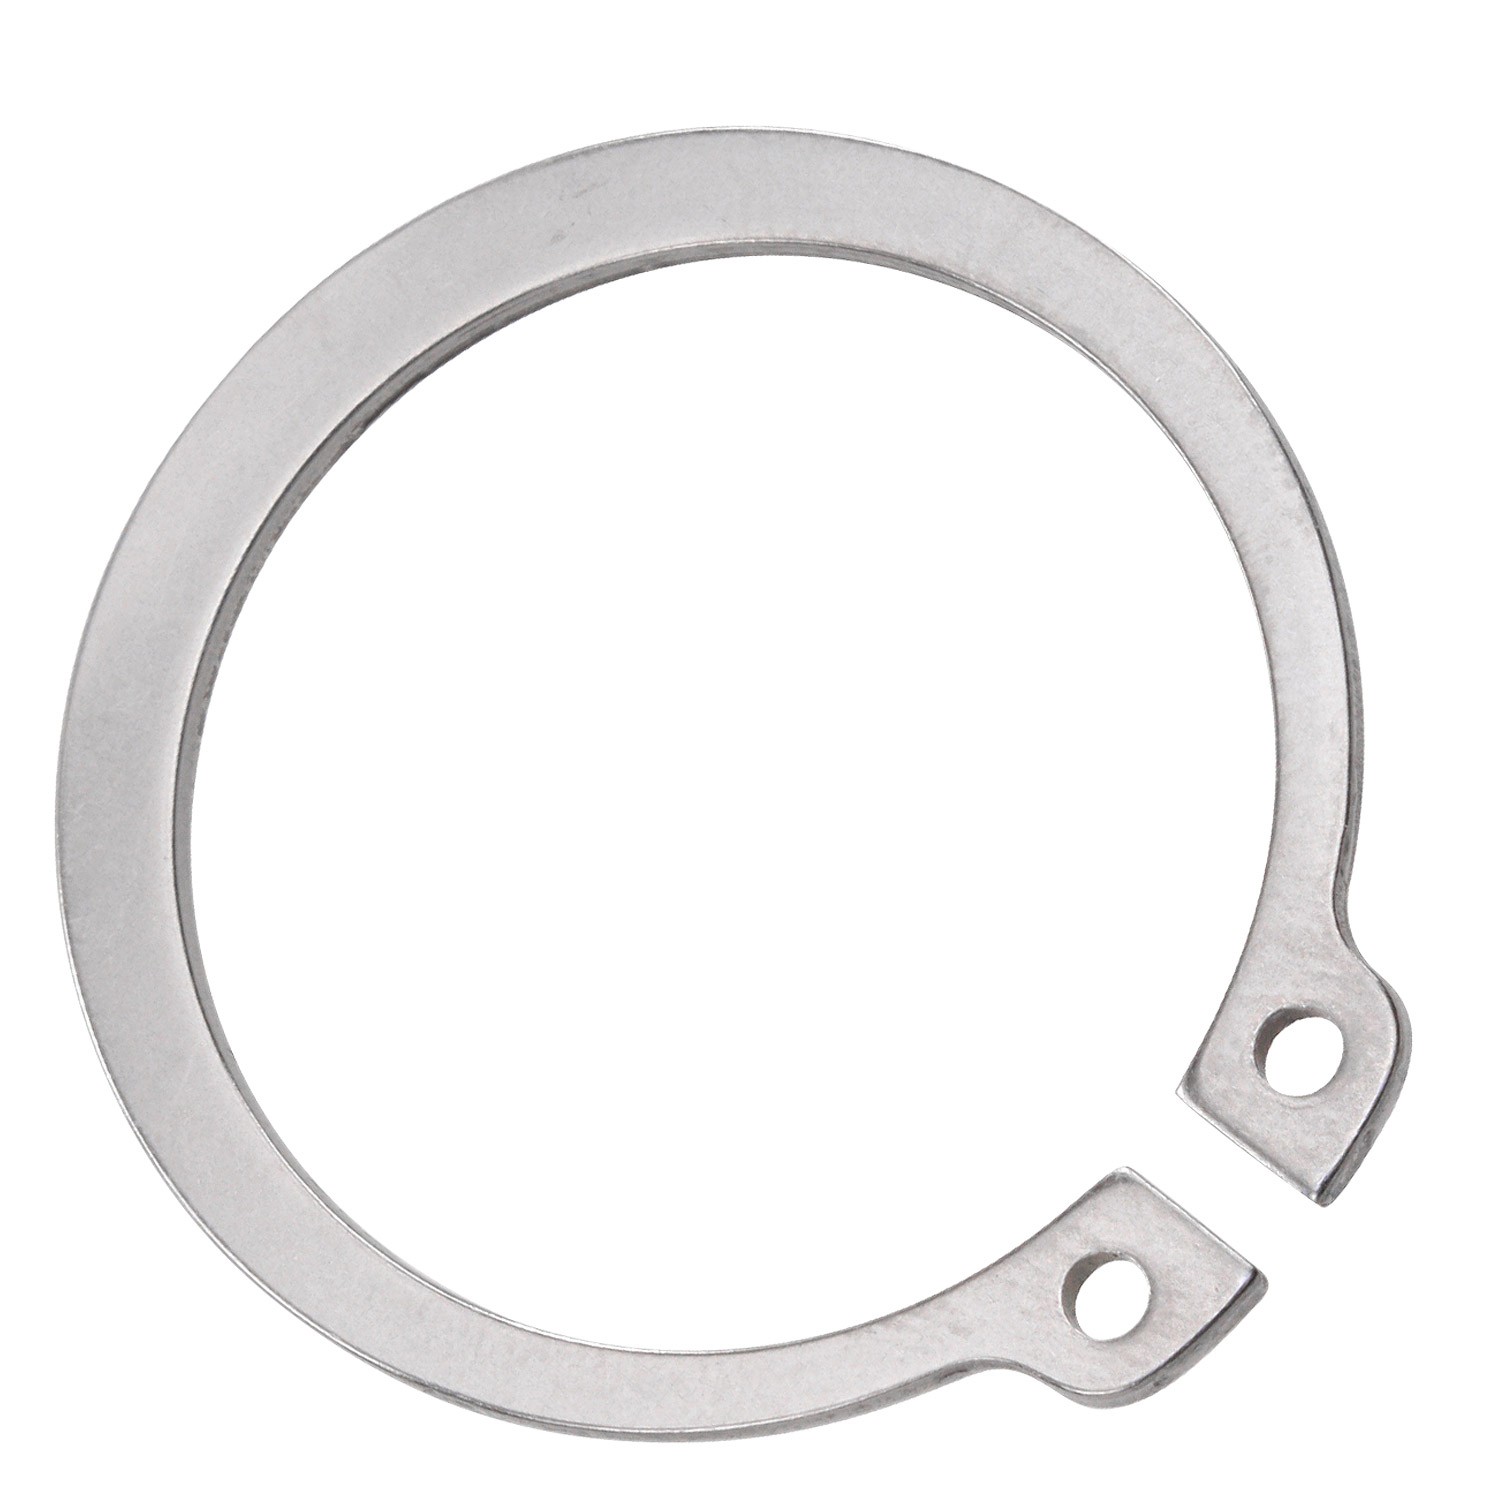 Кольцо стопорное наружное 25х1,2 DIN 471, нержавеющая сталь 1.4122 (А2) - фото